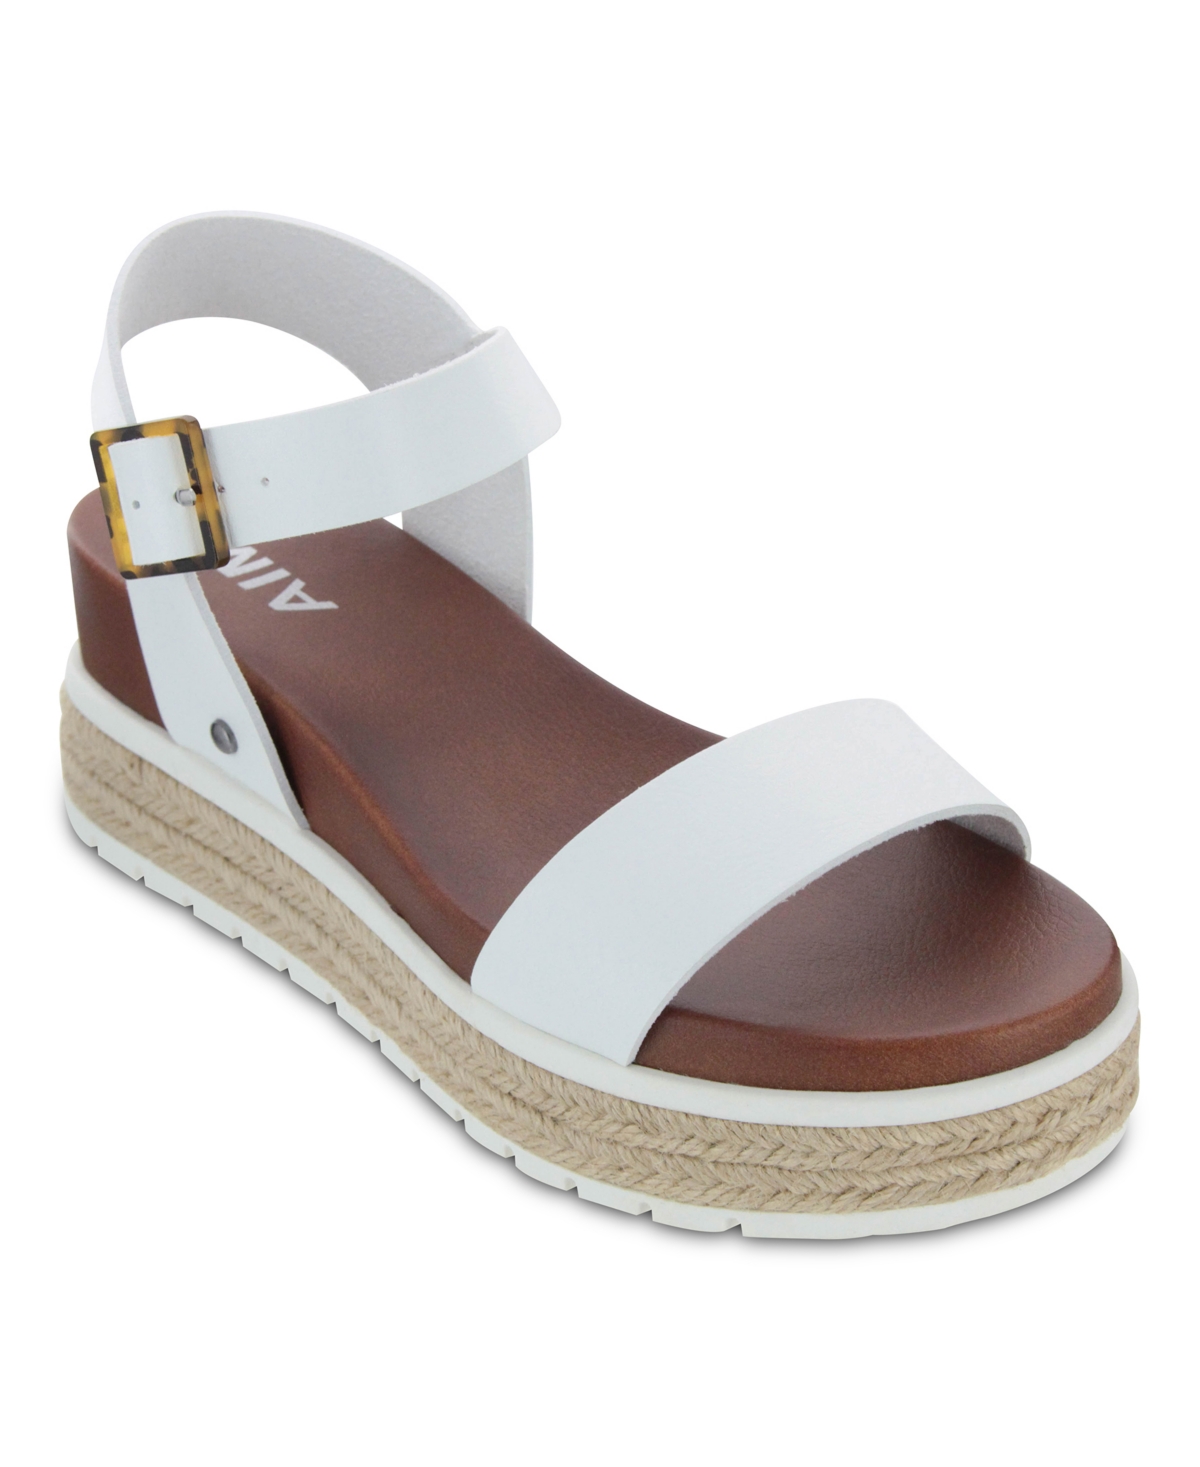 Women's Kiera Flat Sandals - White